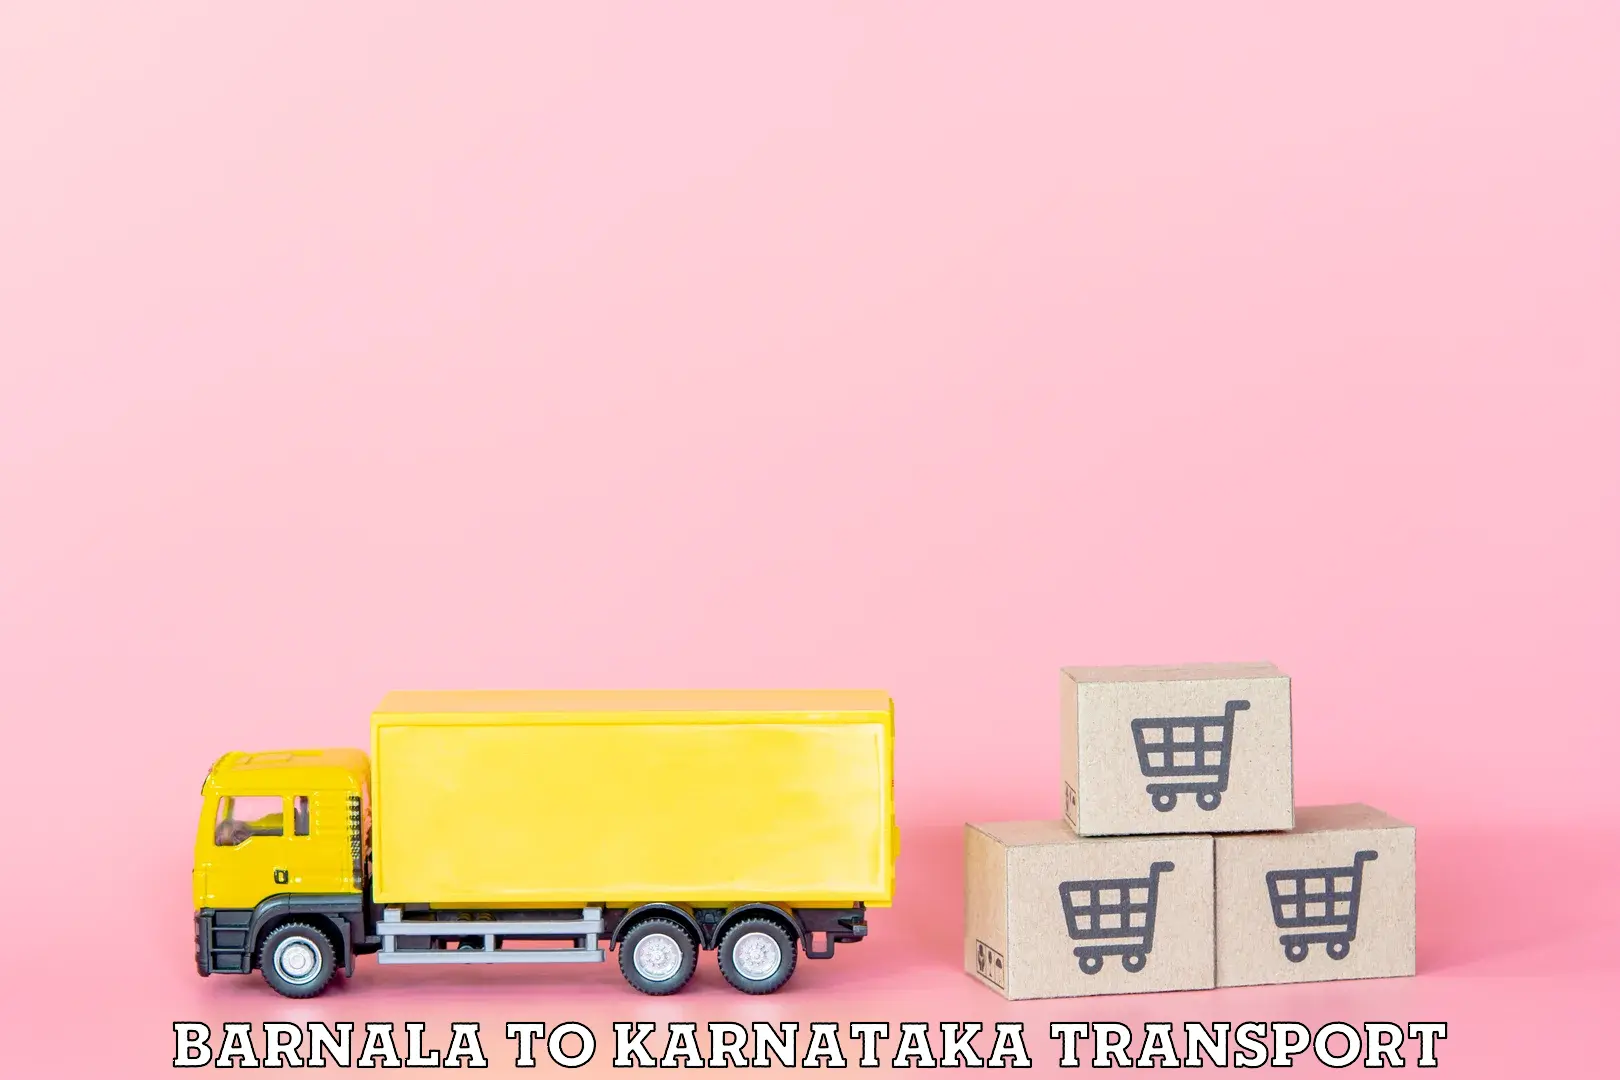 Online transport service Barnala to Karnataka